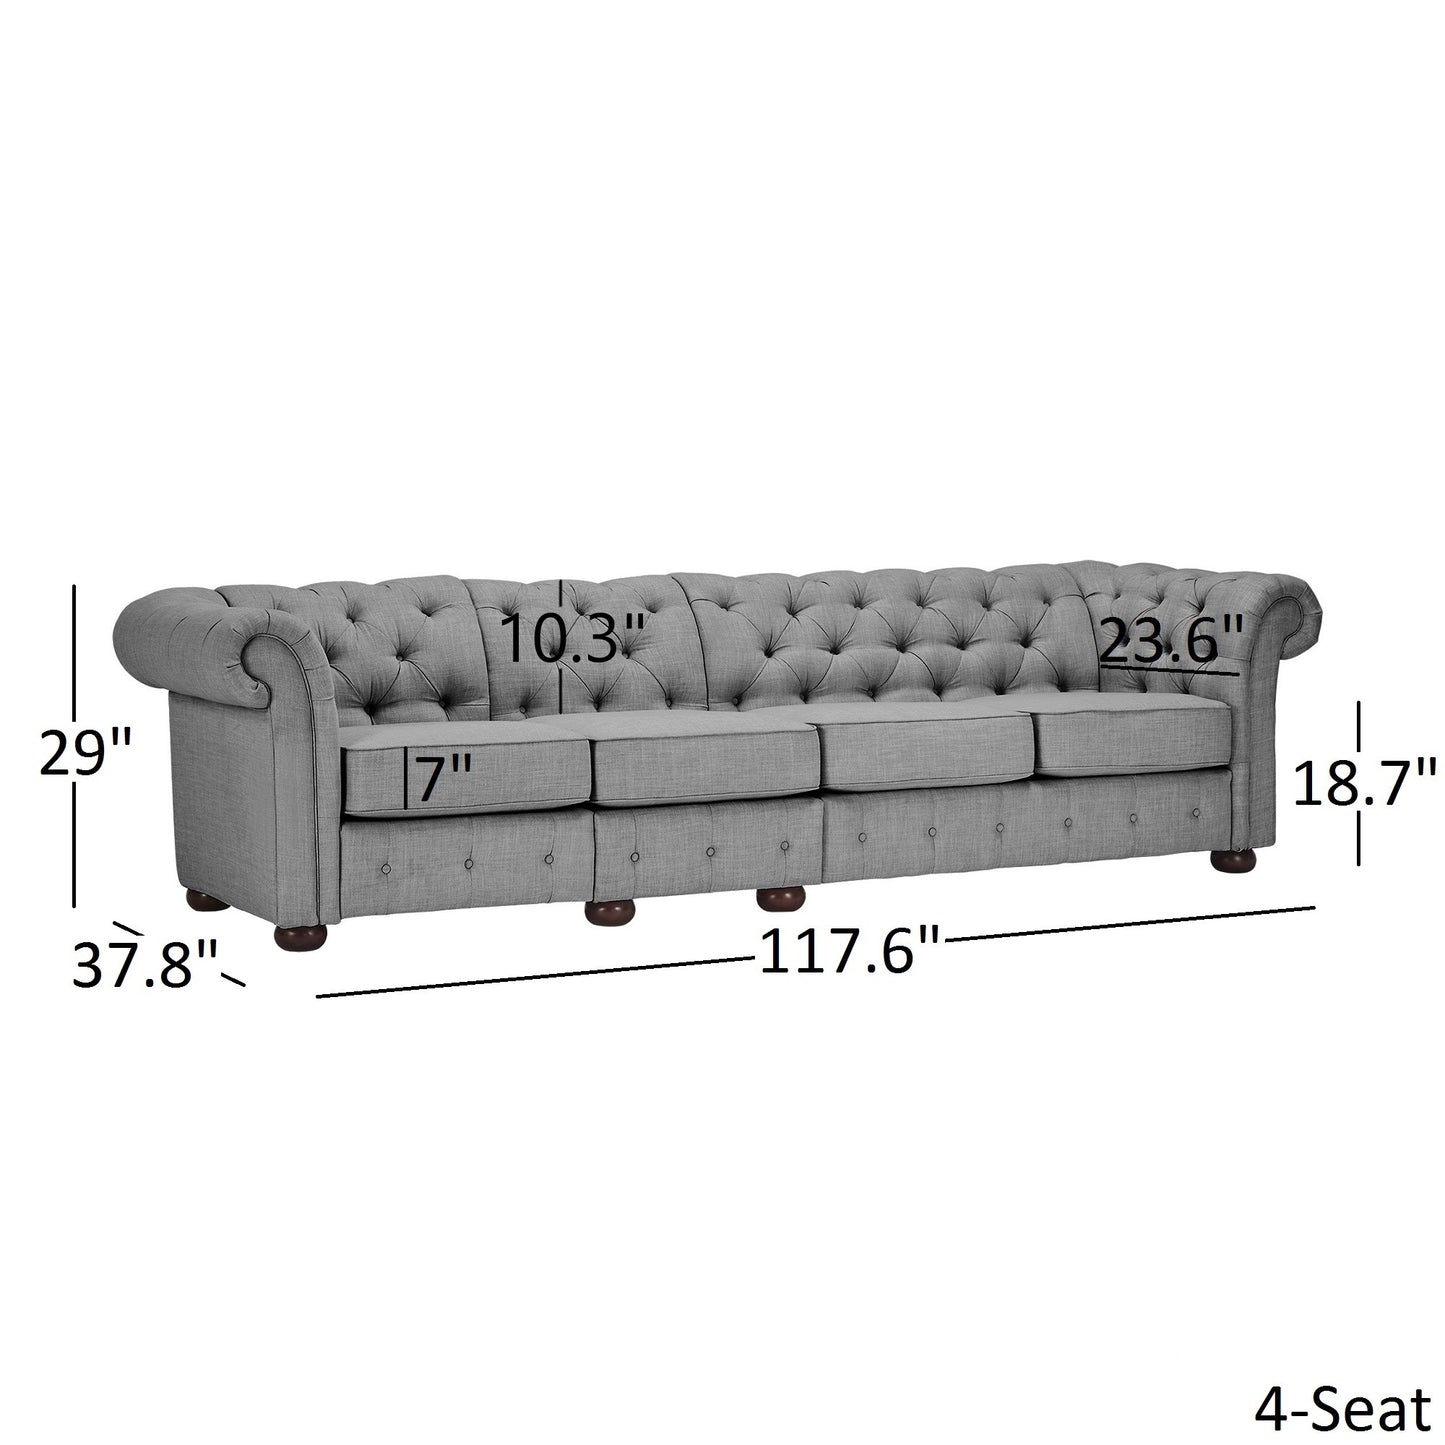 4-Seat Modular Chesterfield Sofa - Grey Linen